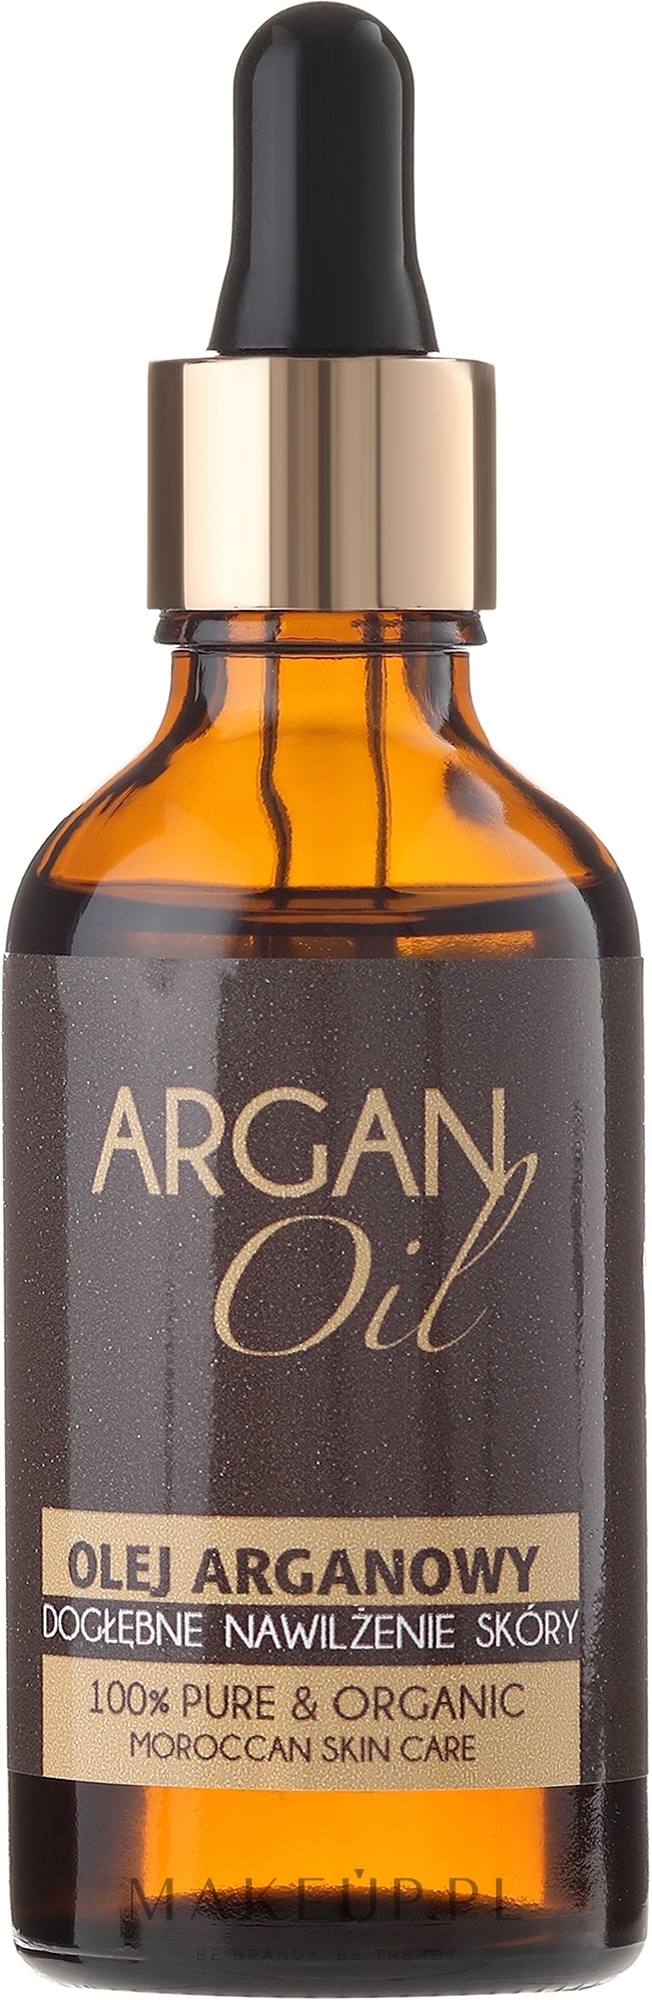 argan oil olejek arganowy do włosów maroko 50ml